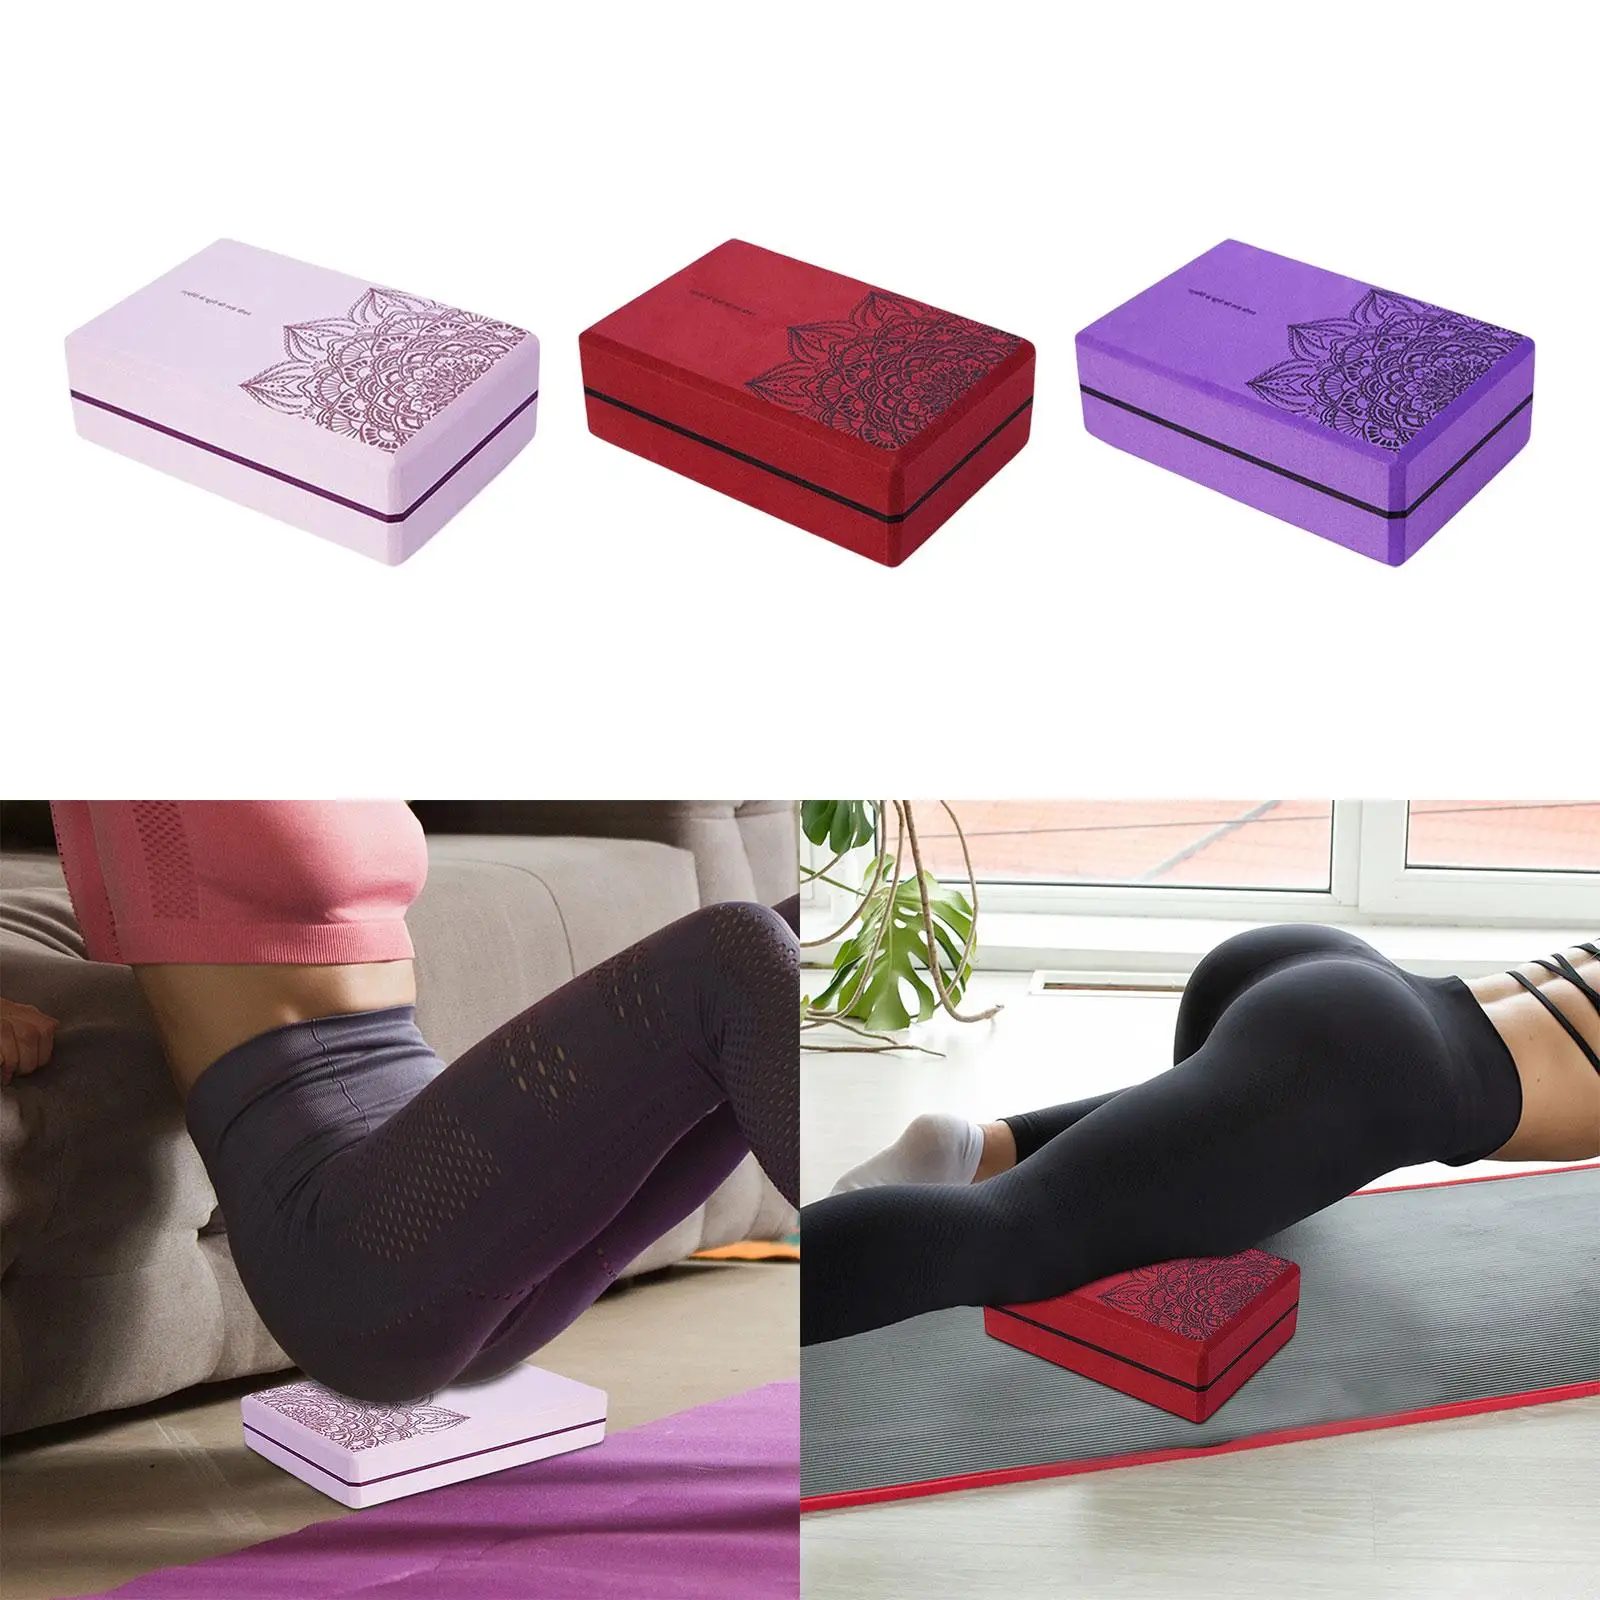 Yoga Block Exercise Bricks High Density EVA Foam Blocks for Home Gym Improve Flexibility